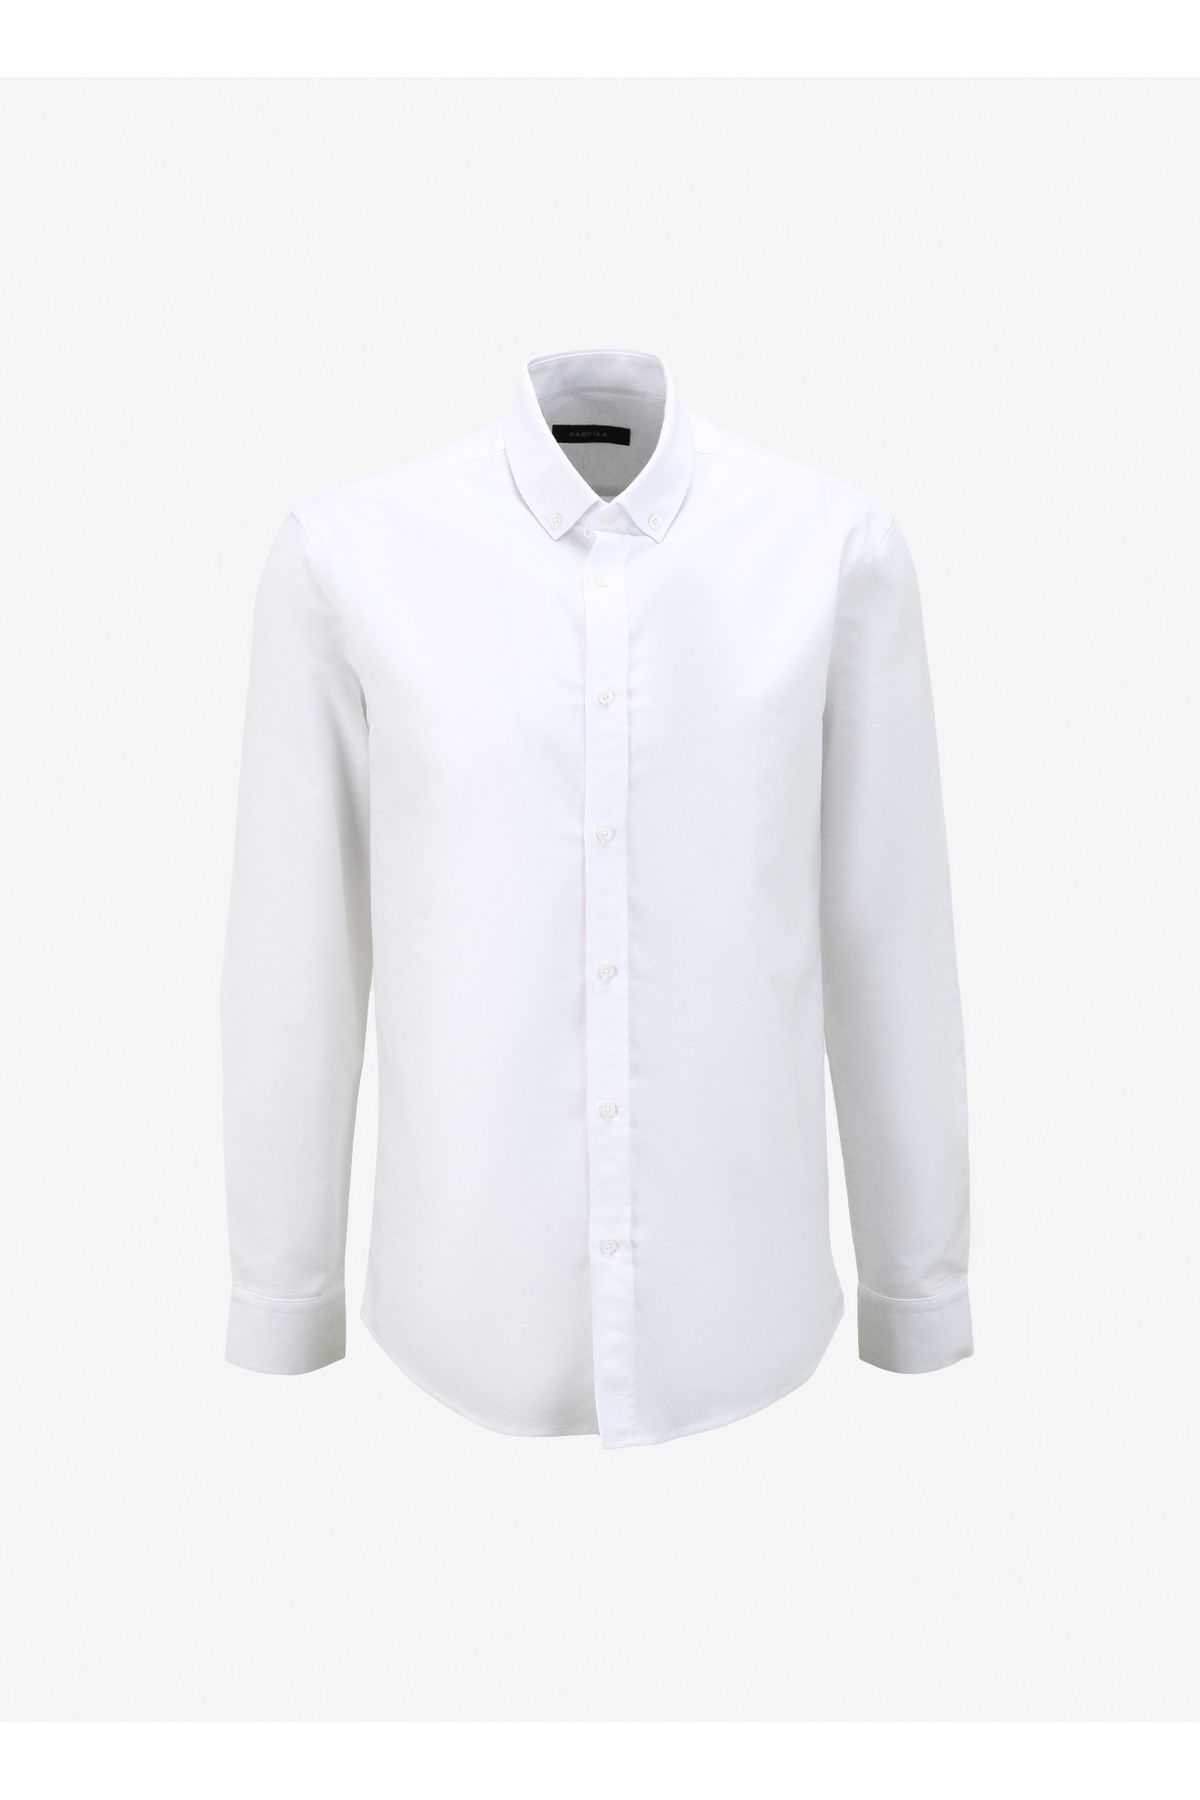 Fabrika Basic Gömlek Yaka Düz Beyaz Erkek Gömlek F4SM-GML 1000